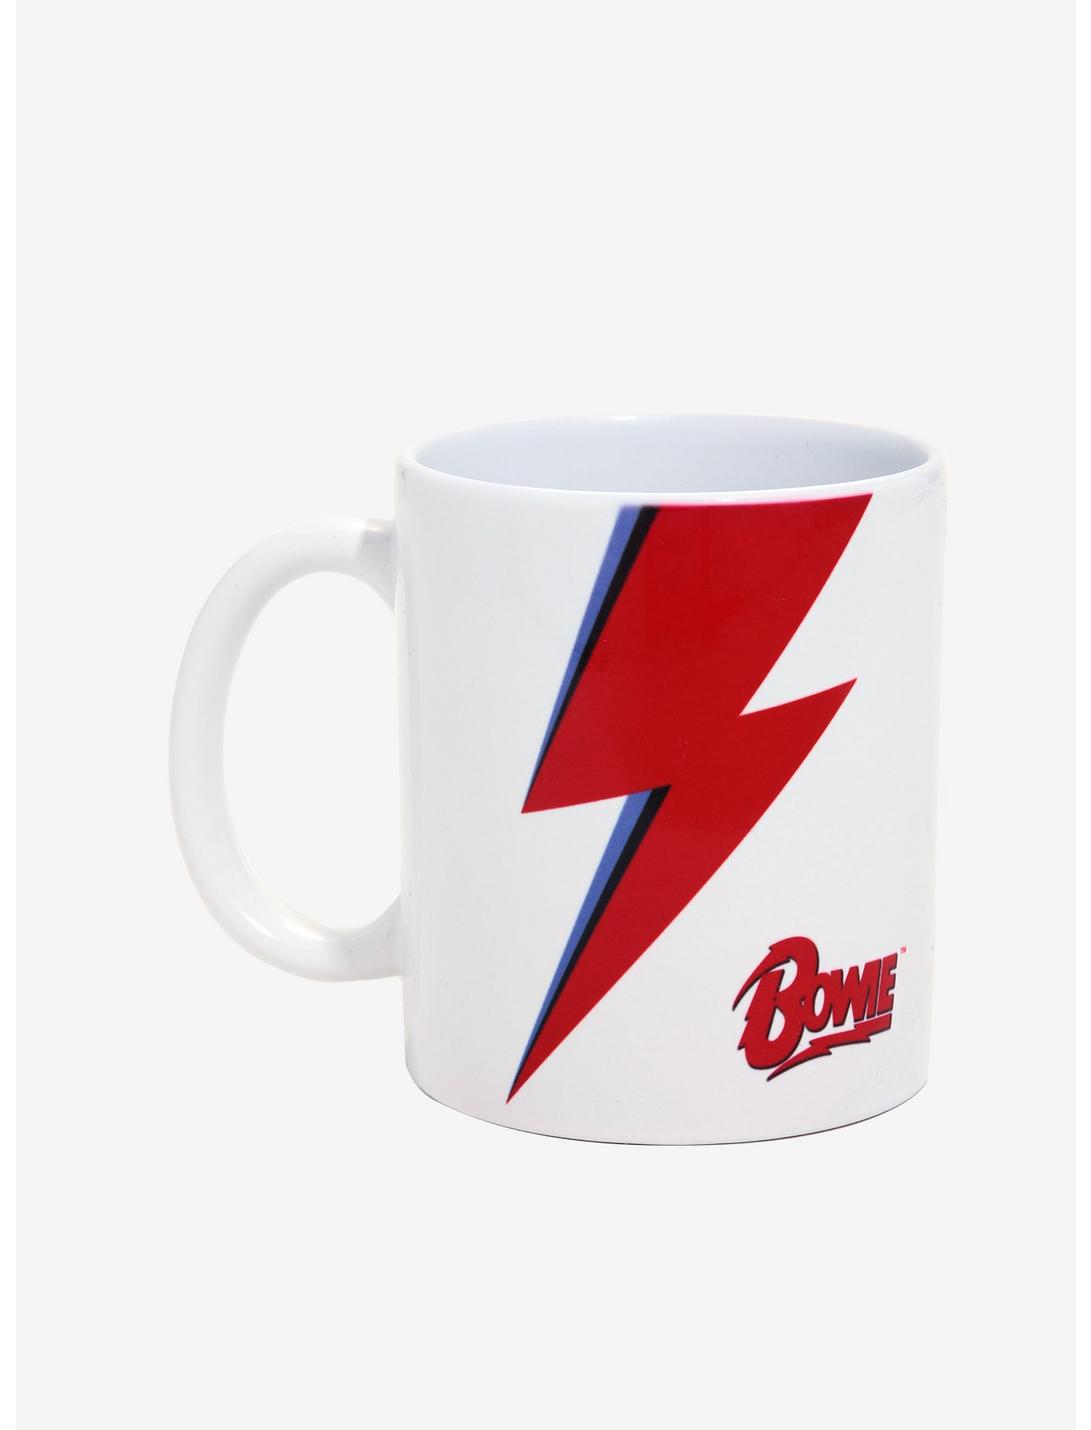 David Bowie Ceramic Mug, , hi-res